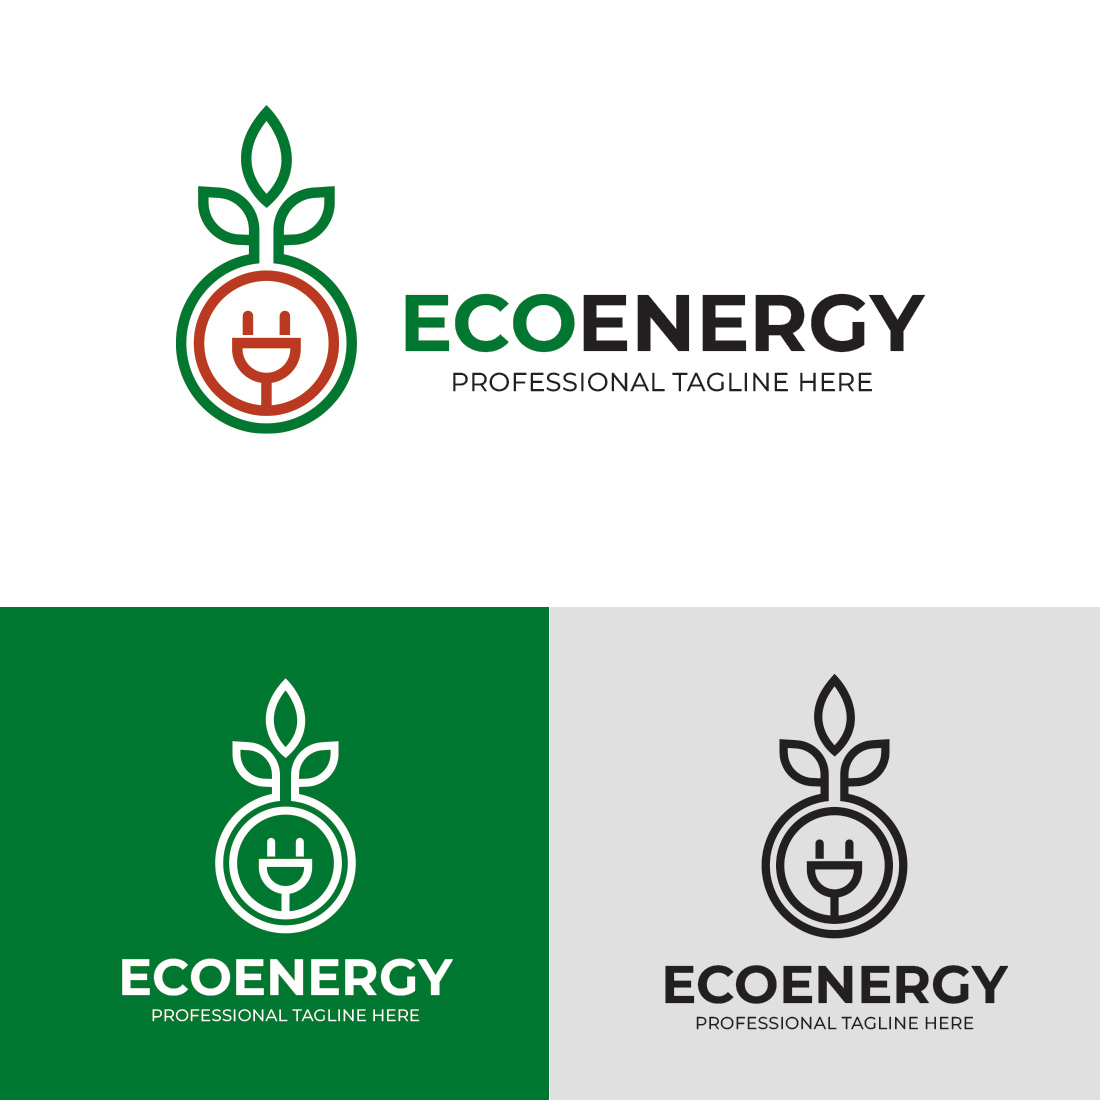 Eco Energy Logo Template - EcoEnergy cover image.